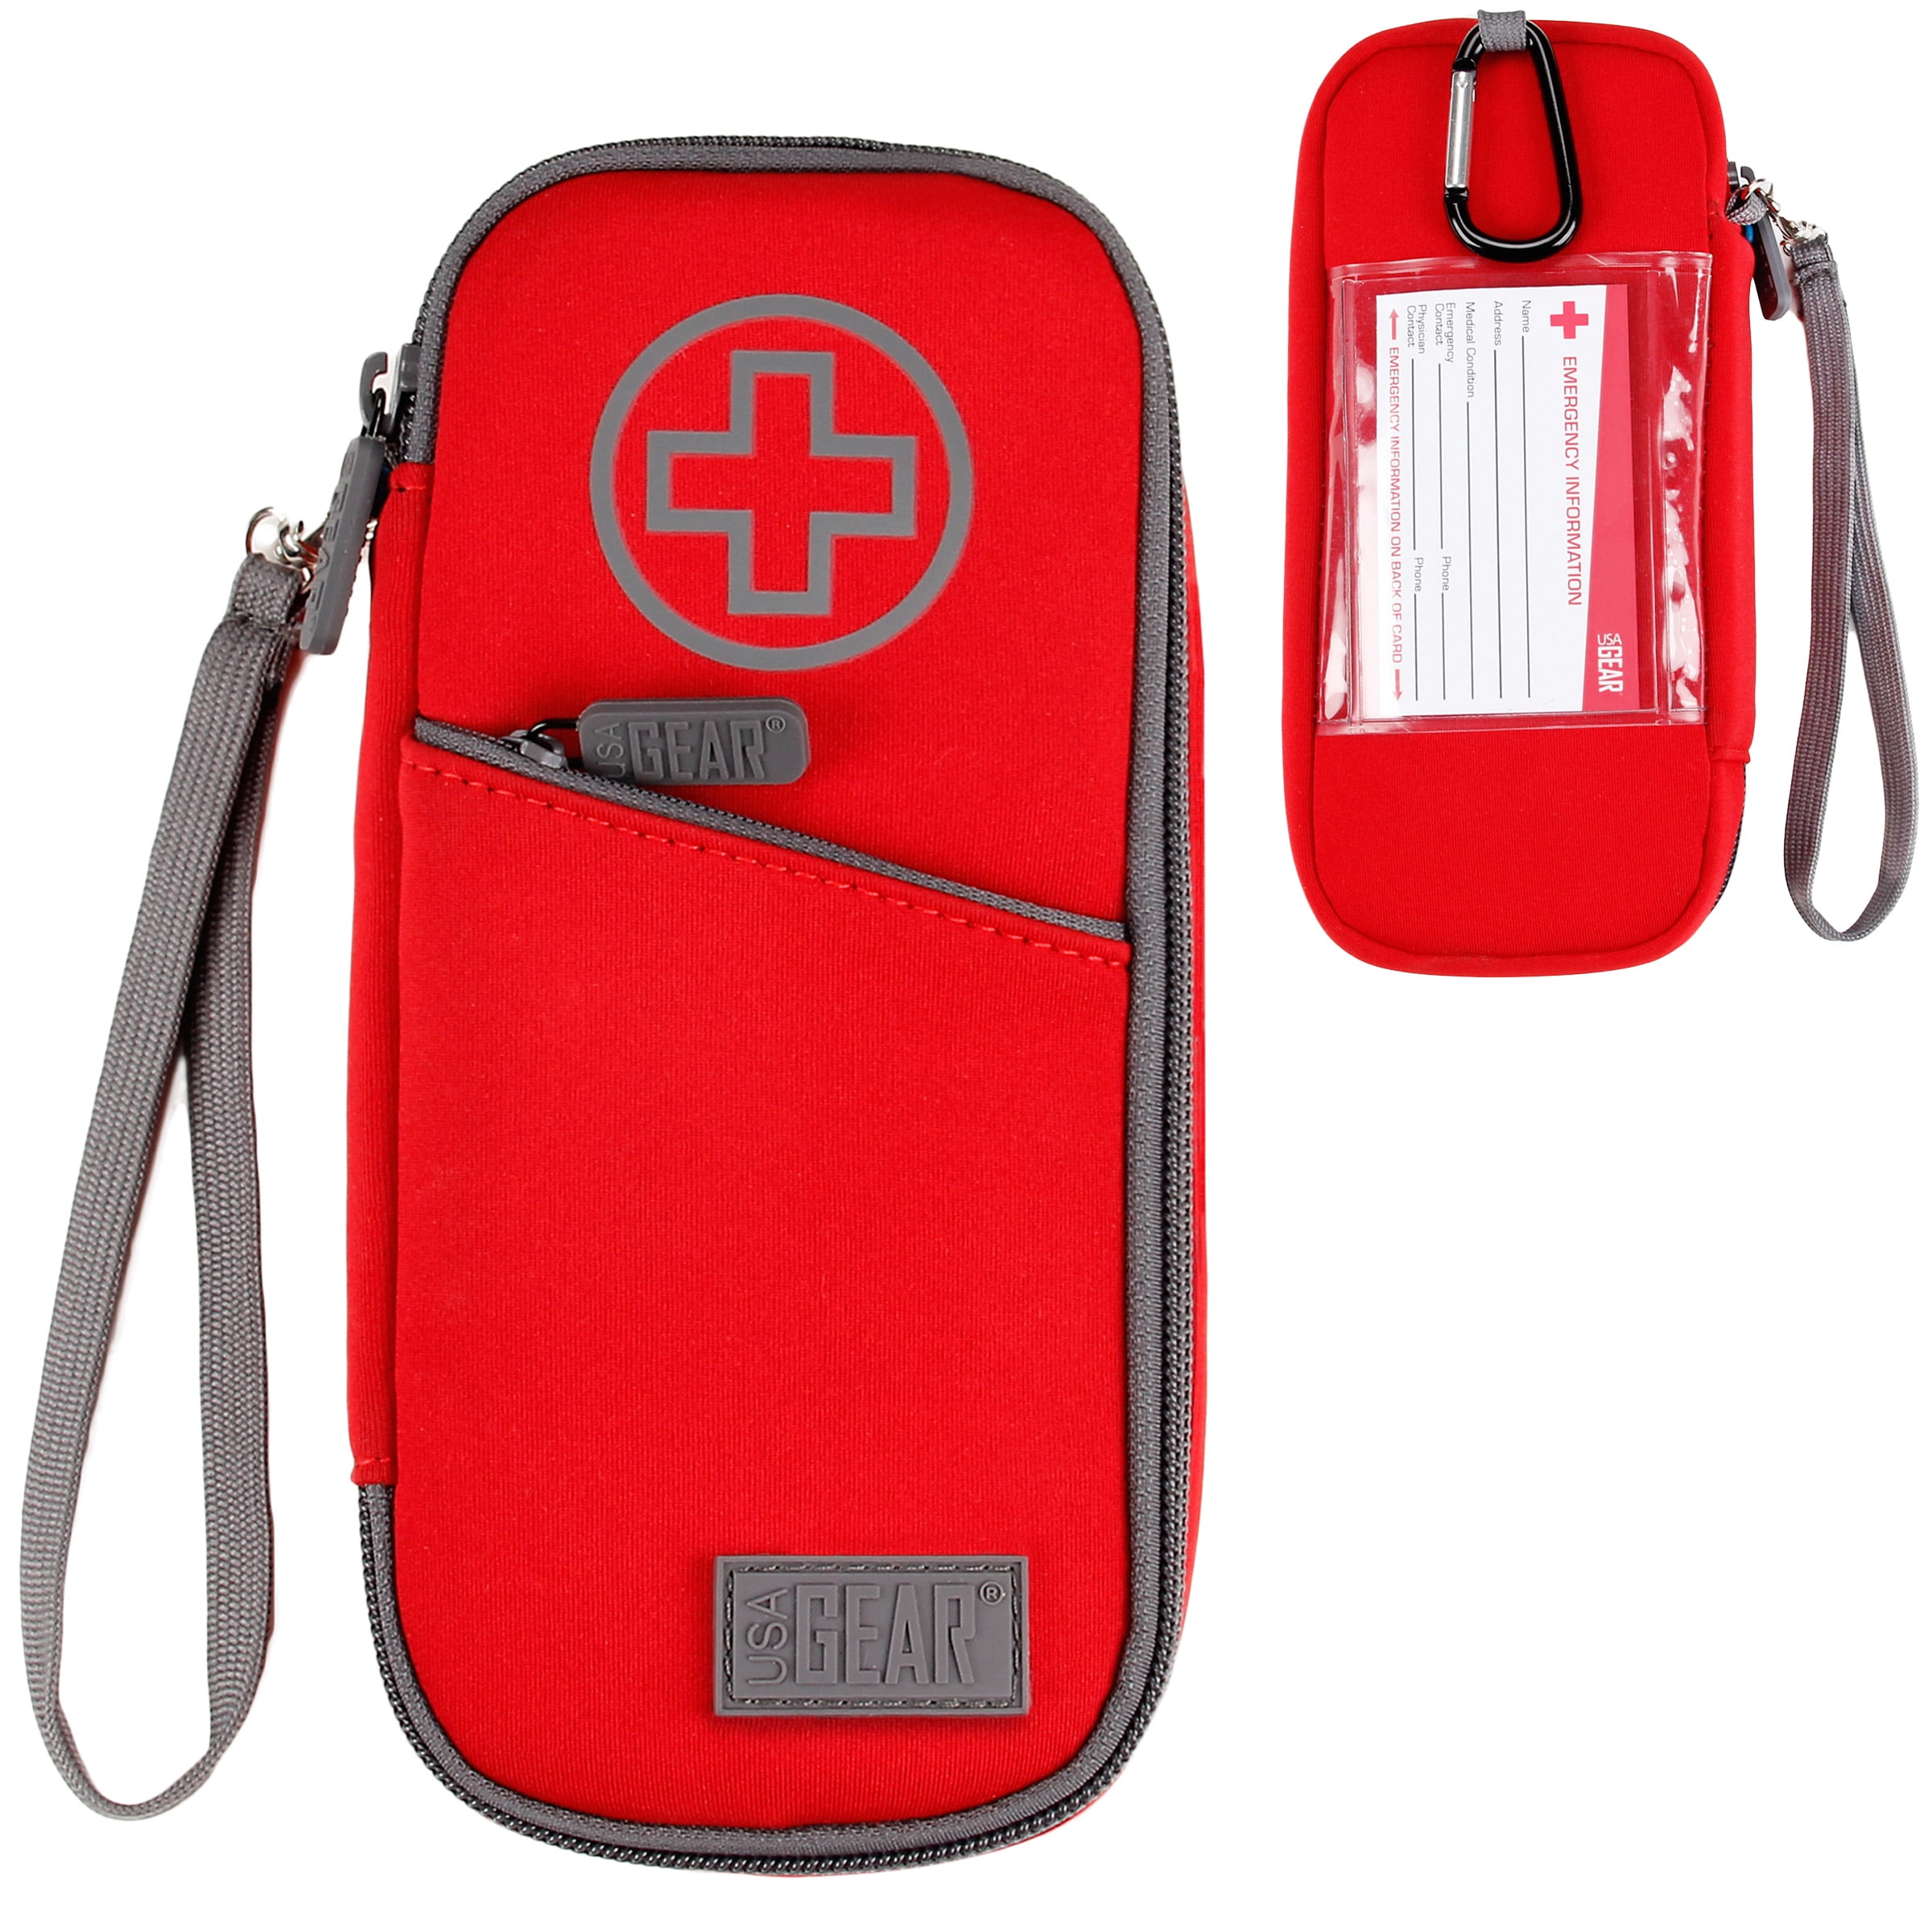  PracMedic Bags Epipen Carry Case- Insulated Medical Case for 2  Epi Pens or Auvi Q, Inhaler, Nasal Spray, Allergy Meds, Diabetic Supplies,  Travel Medicine Kit for Emergencies, Updated Model (Red) 